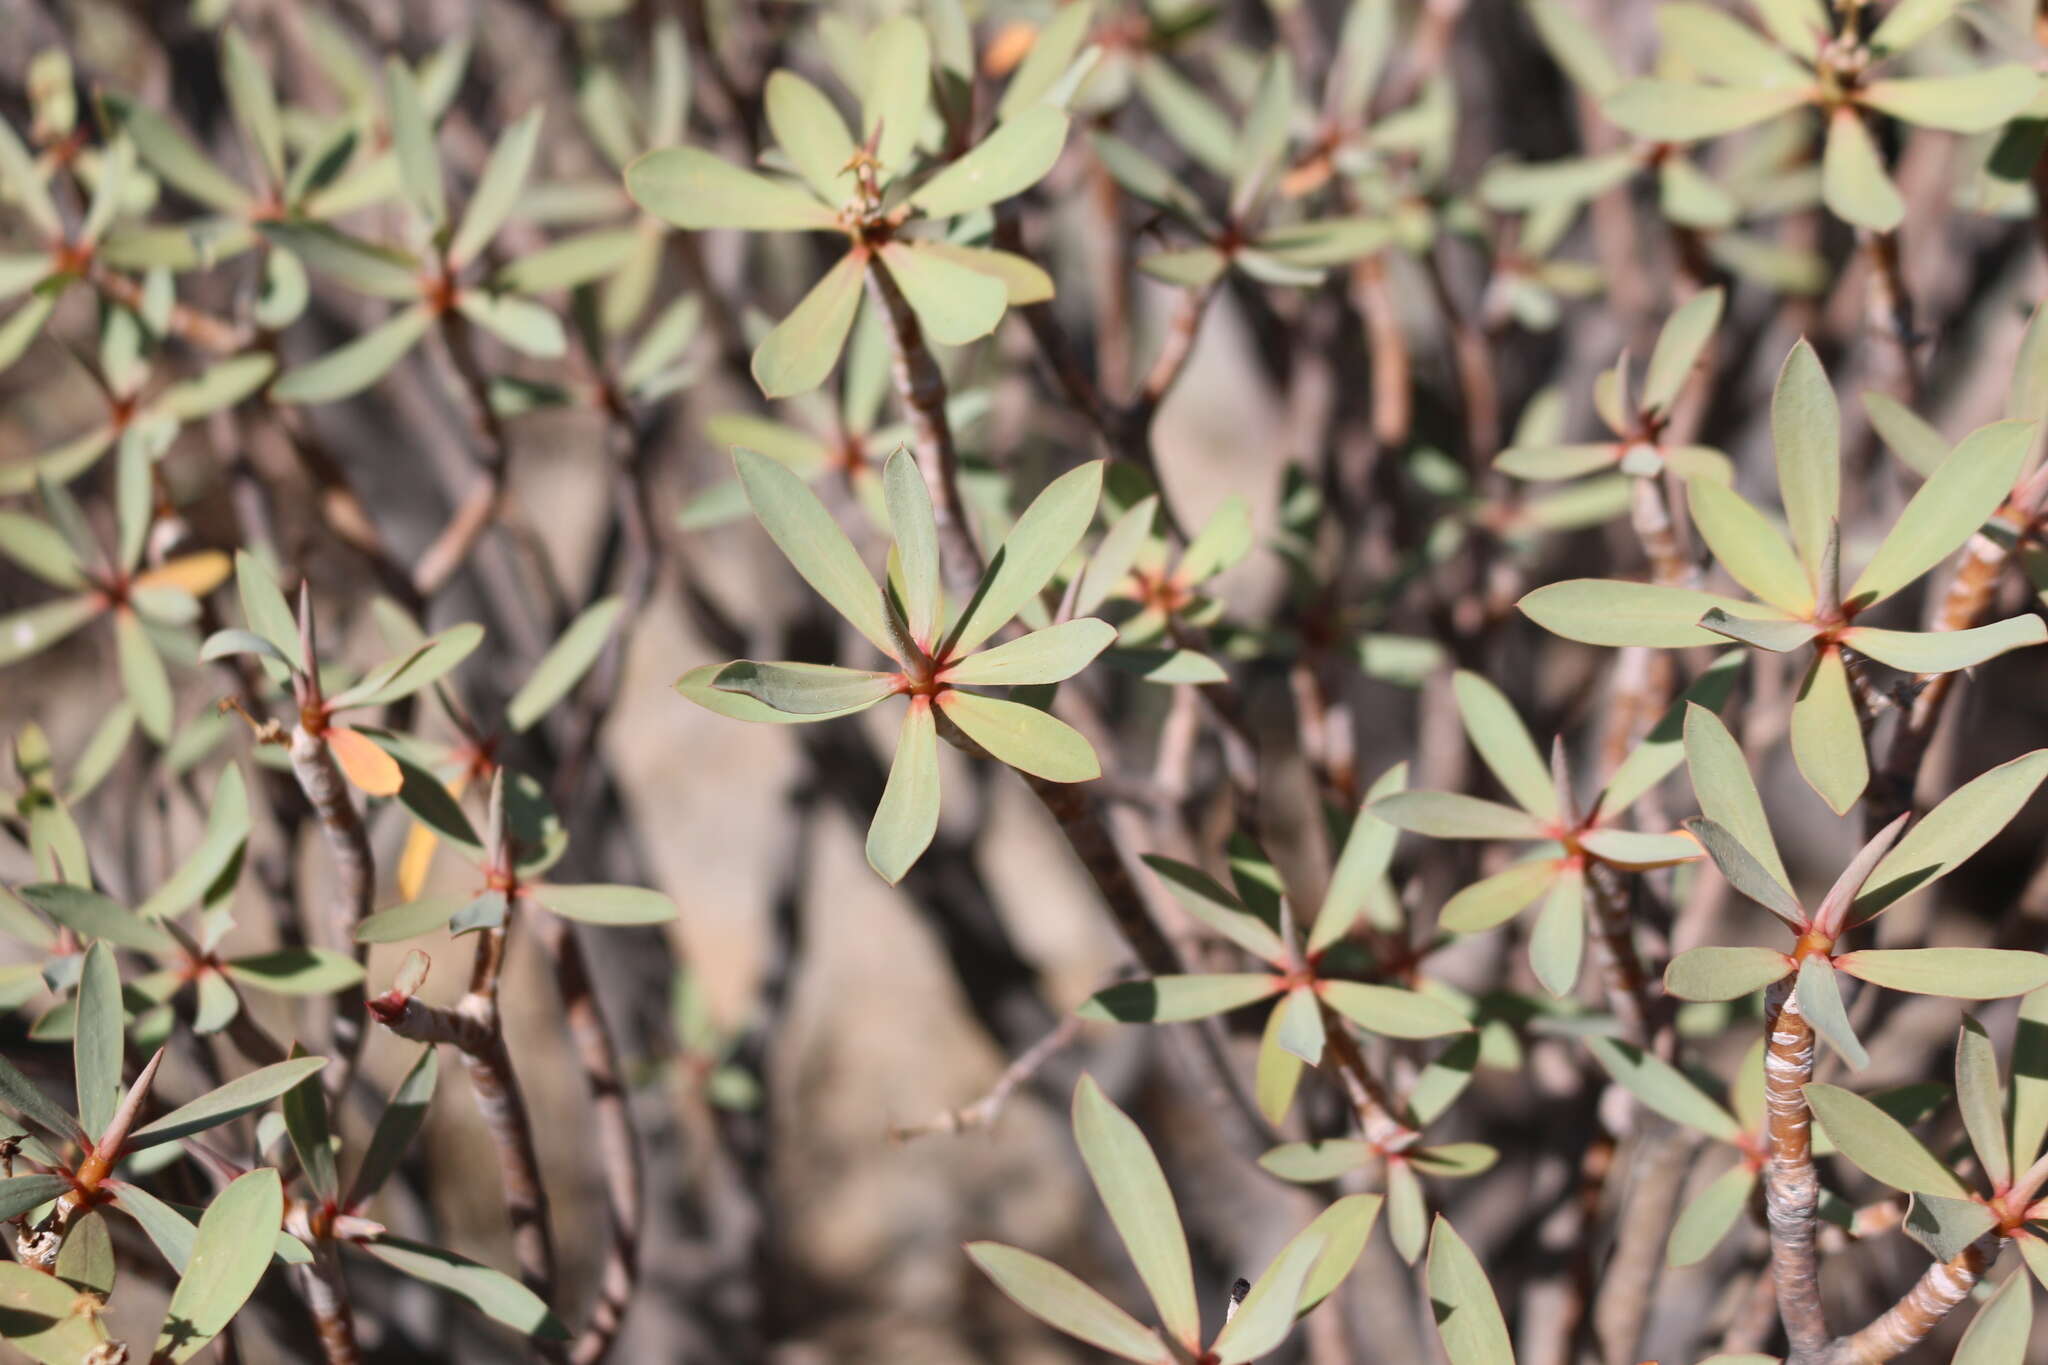 Image of Euphorbia balsamifera Aiton